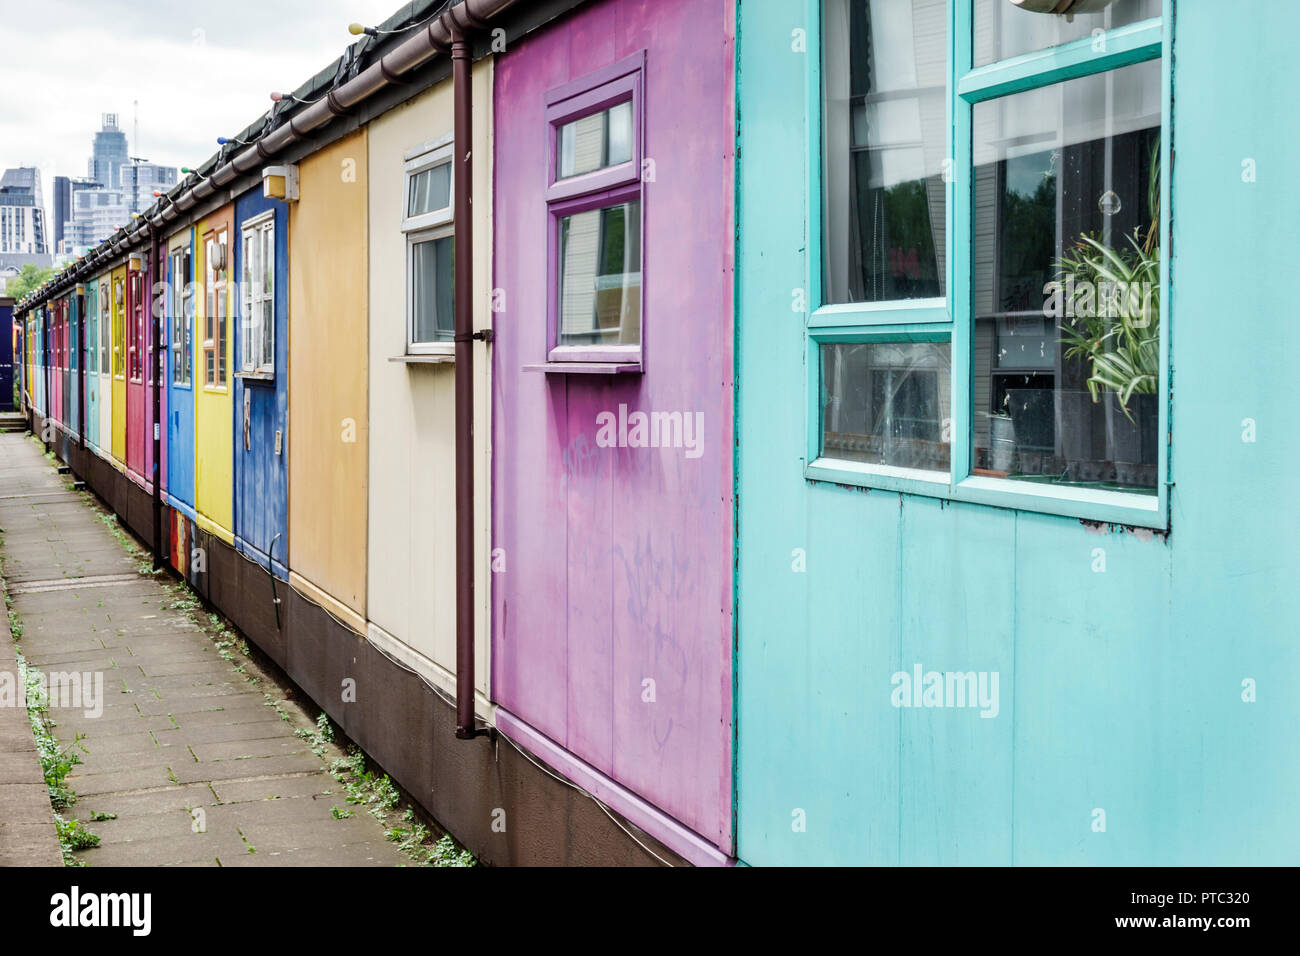 London England,UK,South Bank,Lambeth,Make Space Studios,art studios community,affordable creative workspace,building exterior outside,pastel colors,UK Stock Photo